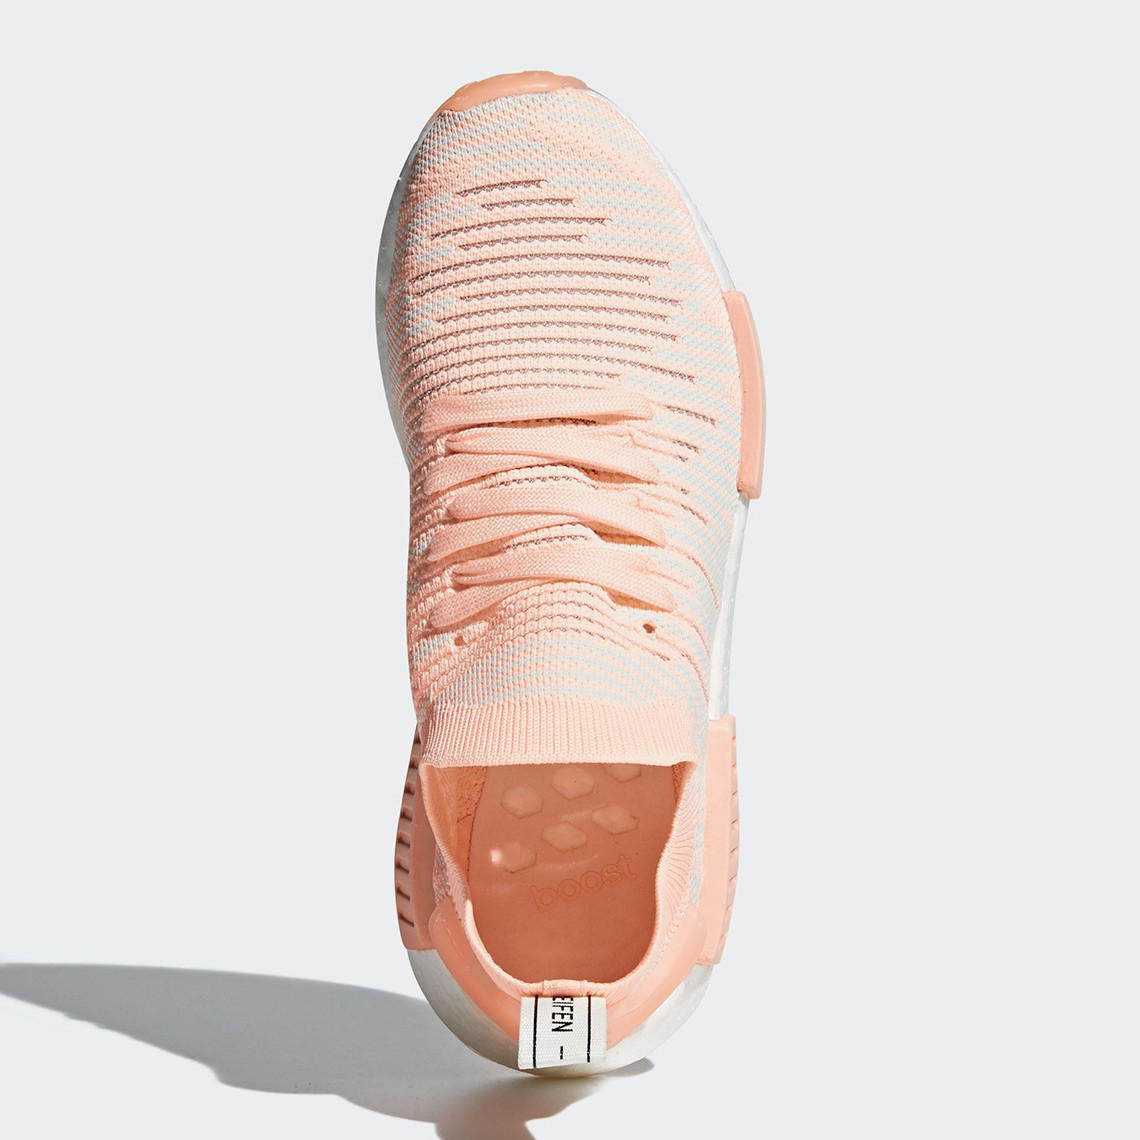 Look Peachy Clean In The Adidas NMD R1 STLT 'Clear Orange' Pack